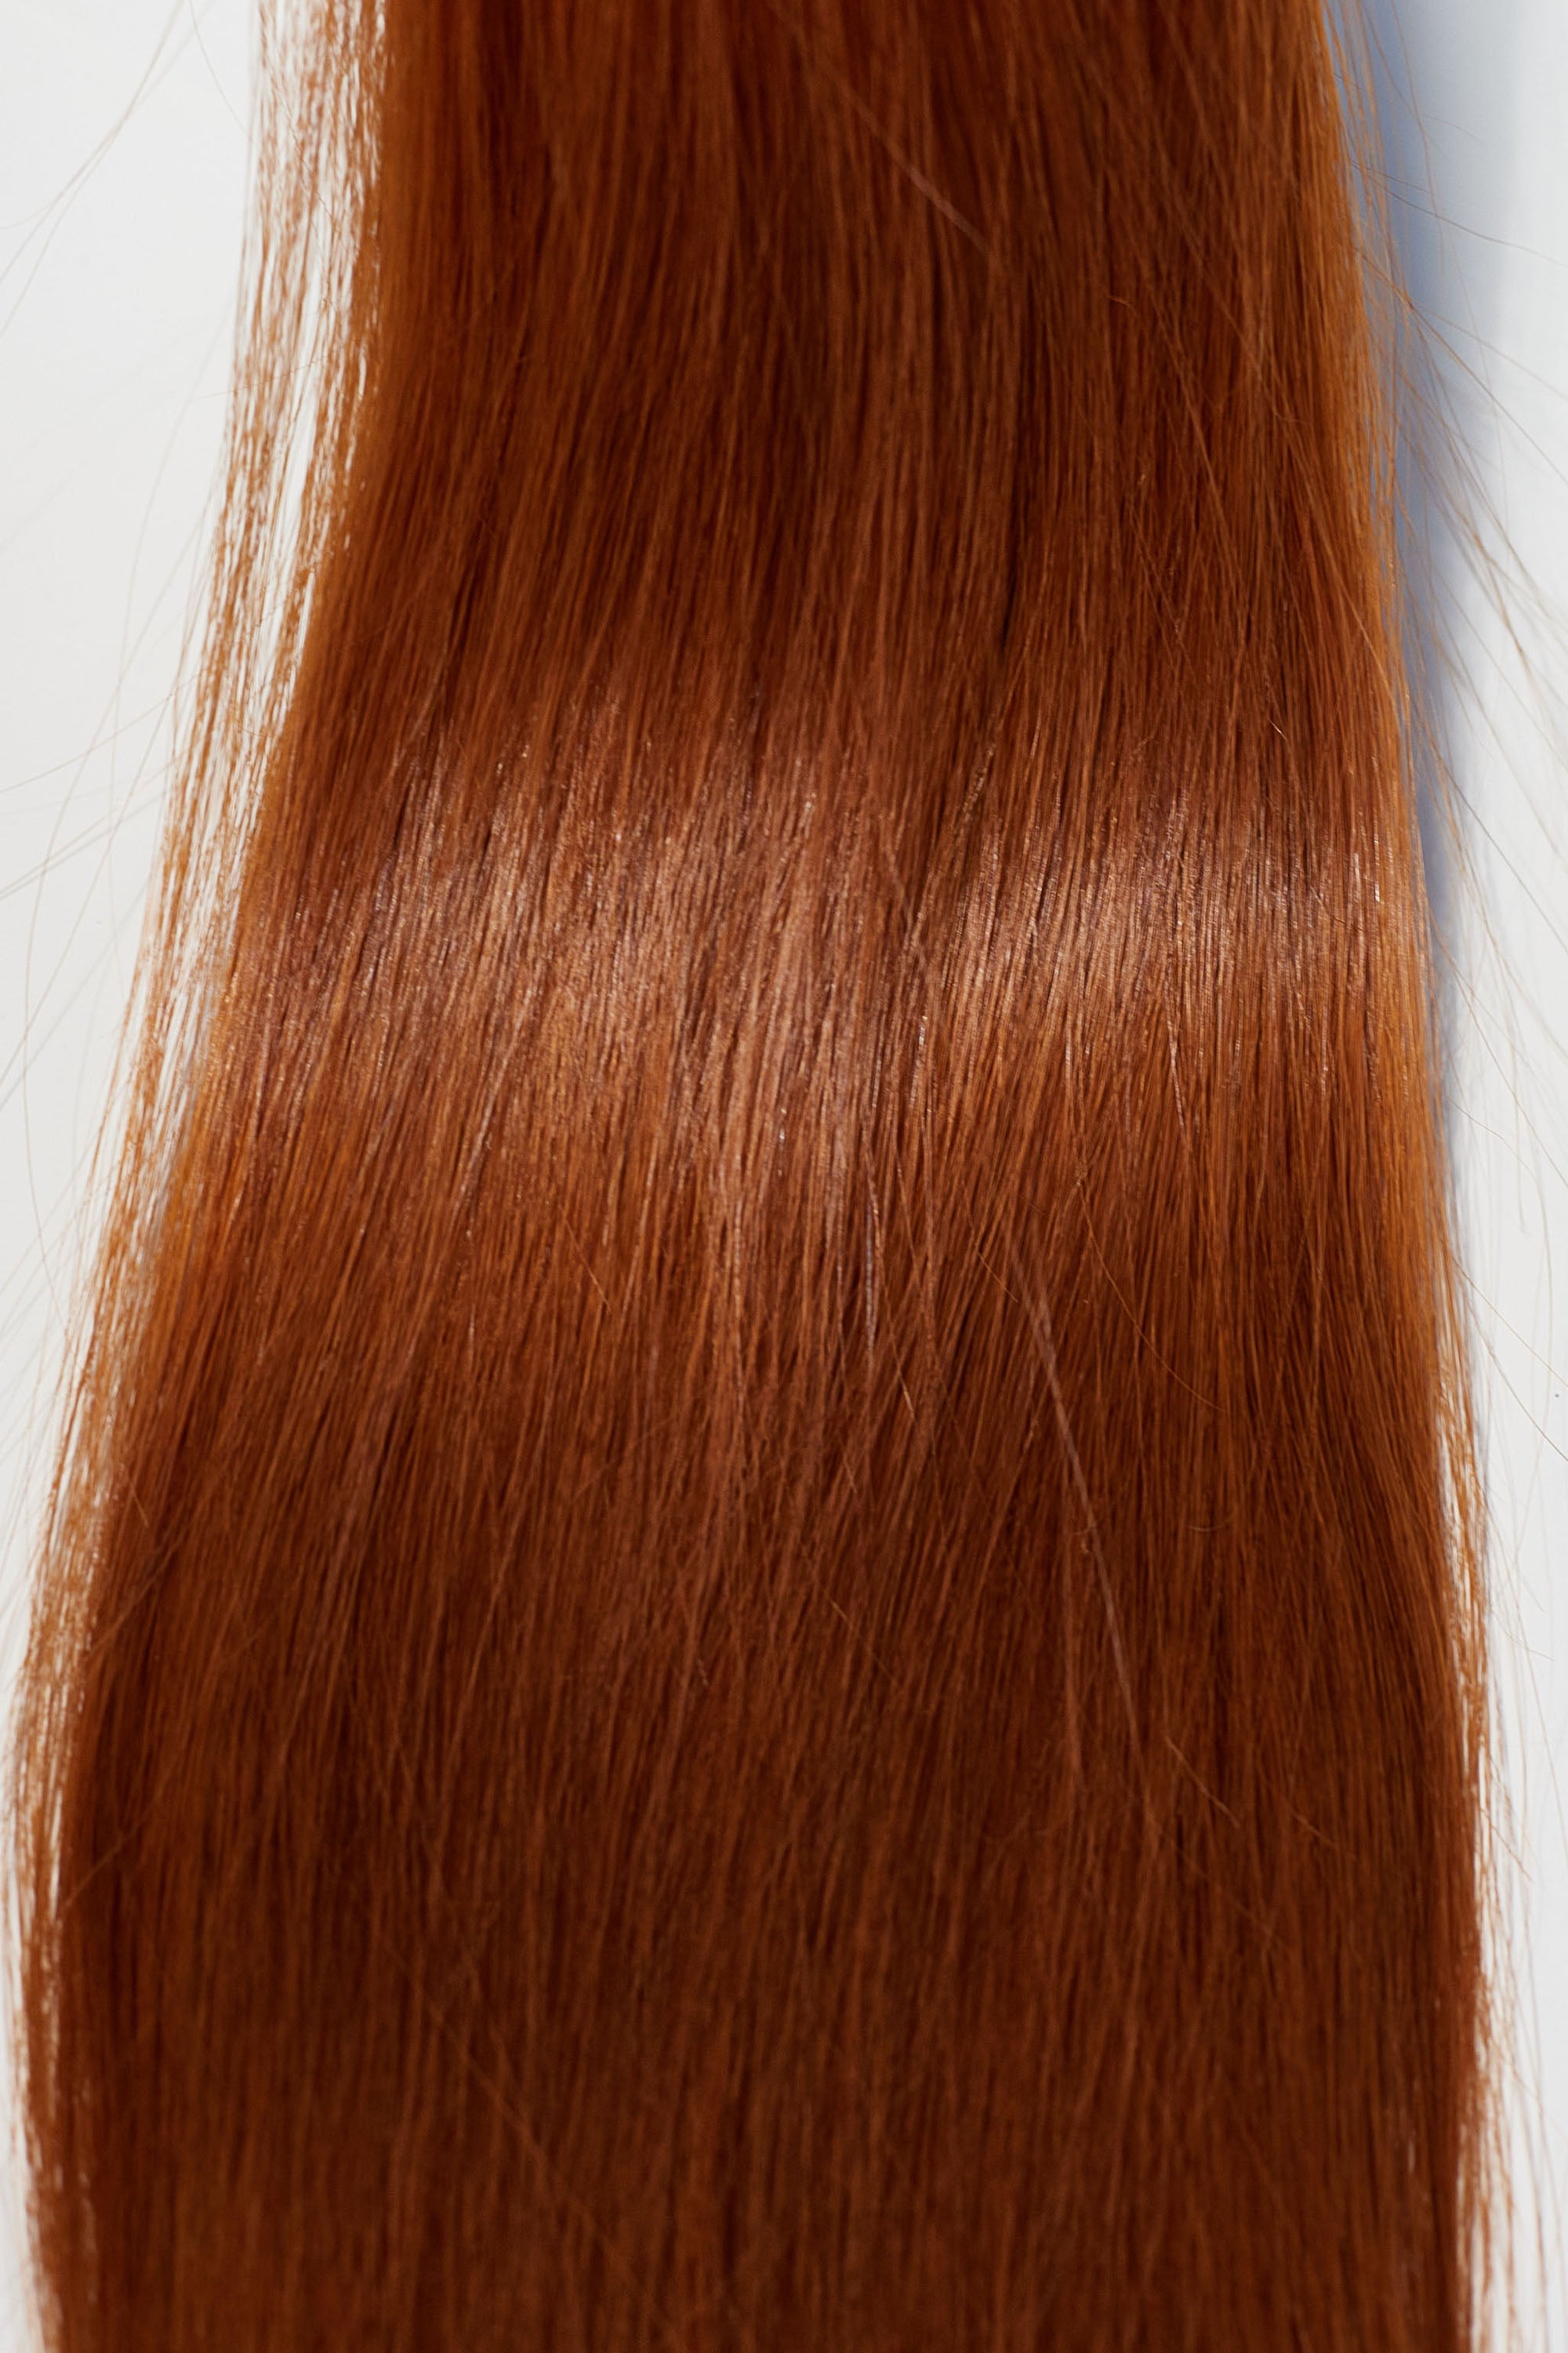 Behair professional Keratin Tip "Premium" 16" (40cm) Natural Straight Brilliant Copper #130 - 25g (Micro - 0.5g each pcs) hair extensions